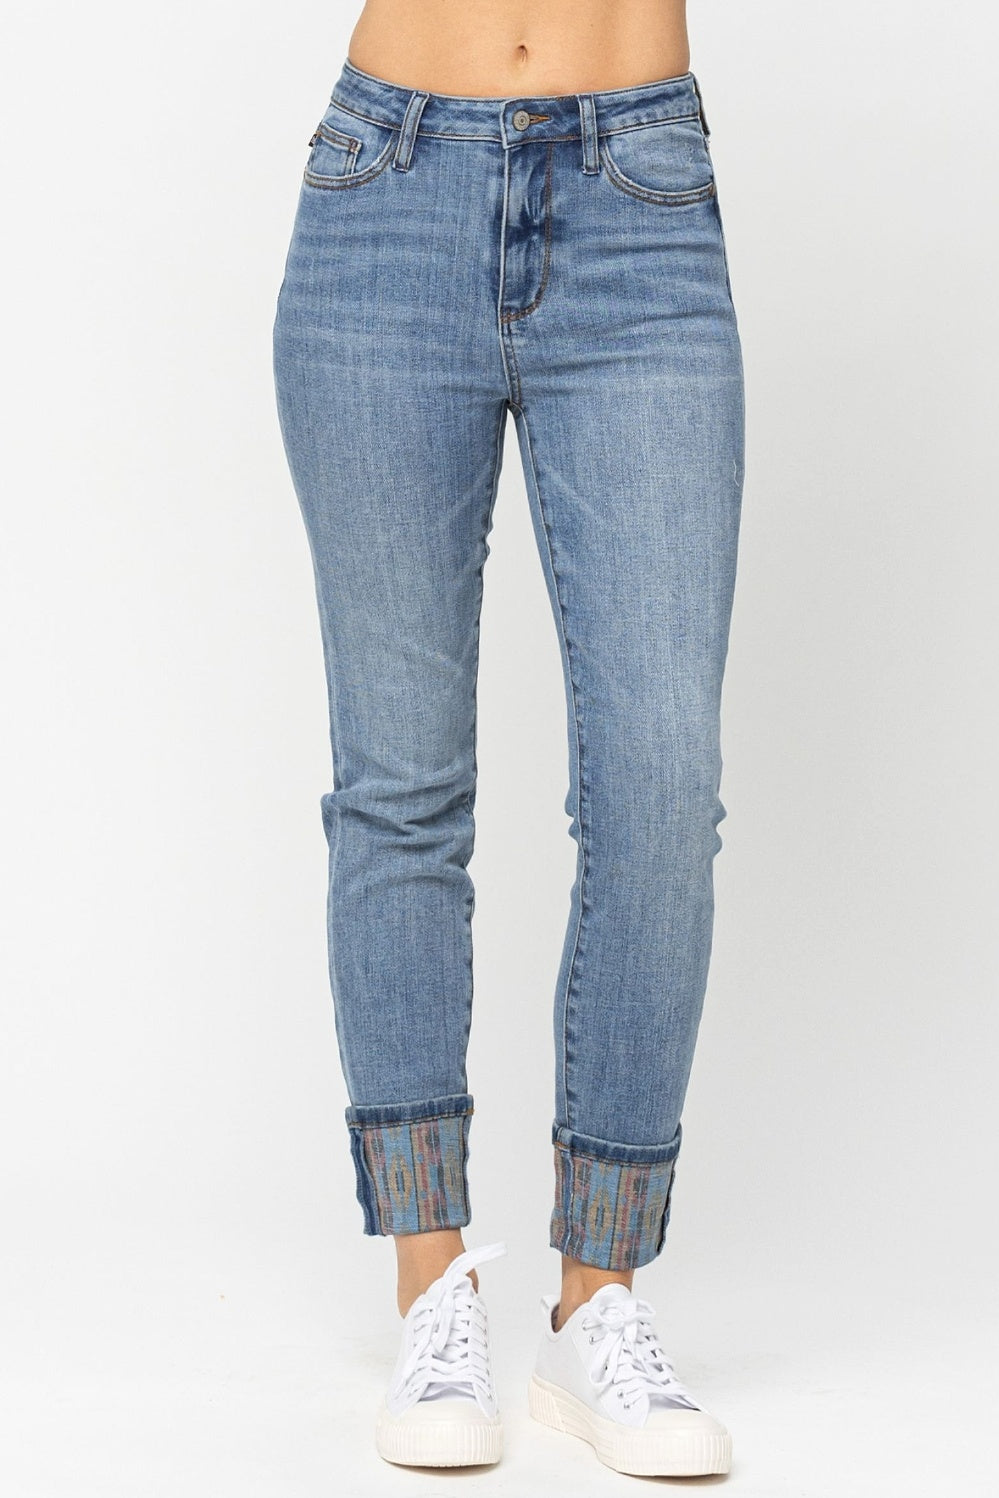 Jeans for 27 - 30 Inseam  Judy Blue Denim for Women 0-24W